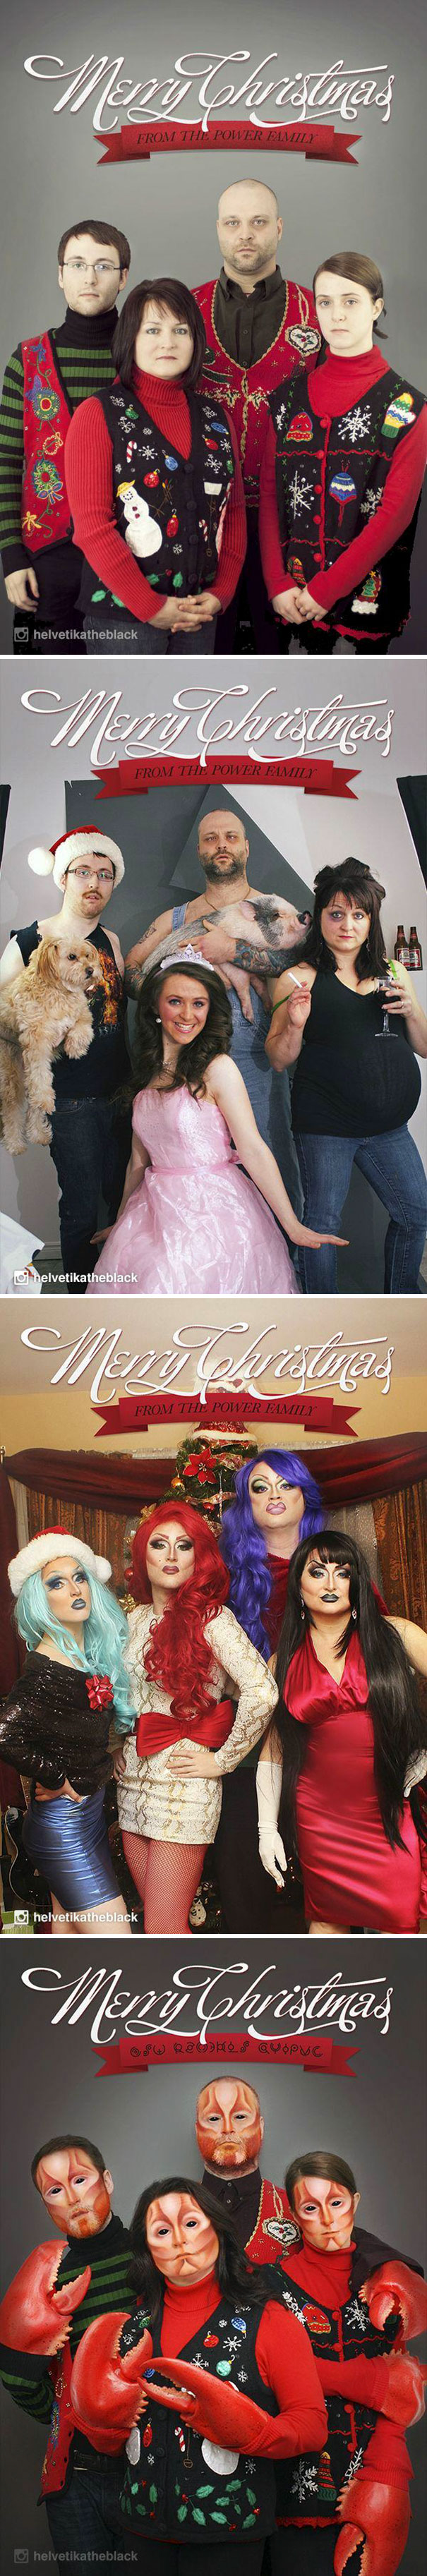 Four Years Of Christmas Family Photos